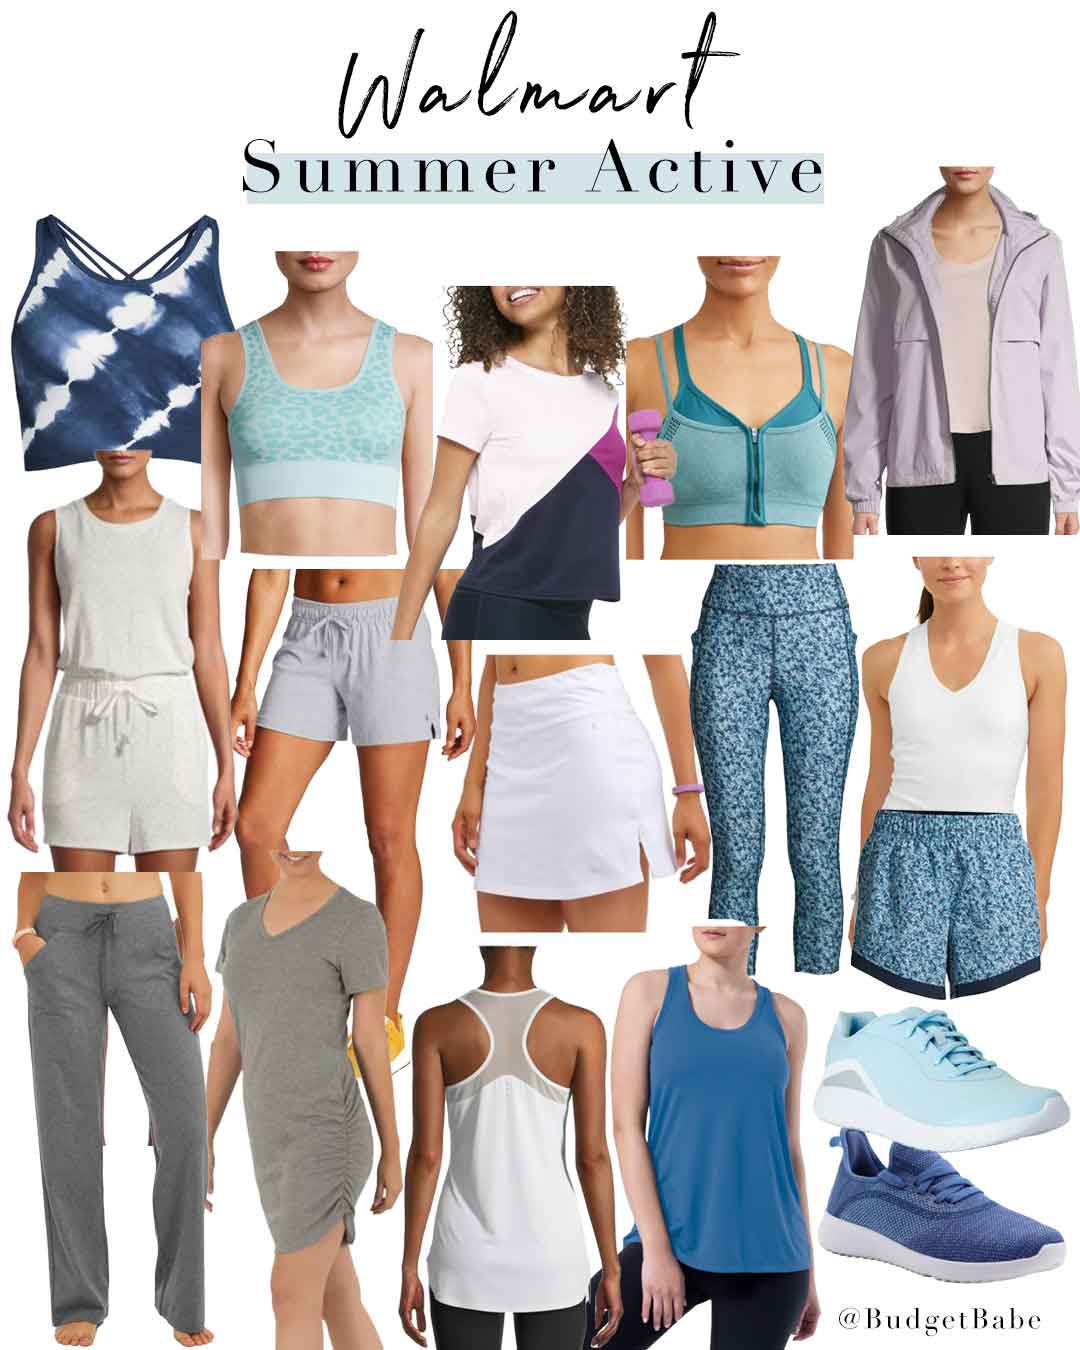 Walmart Summer Active Picks from just $7!